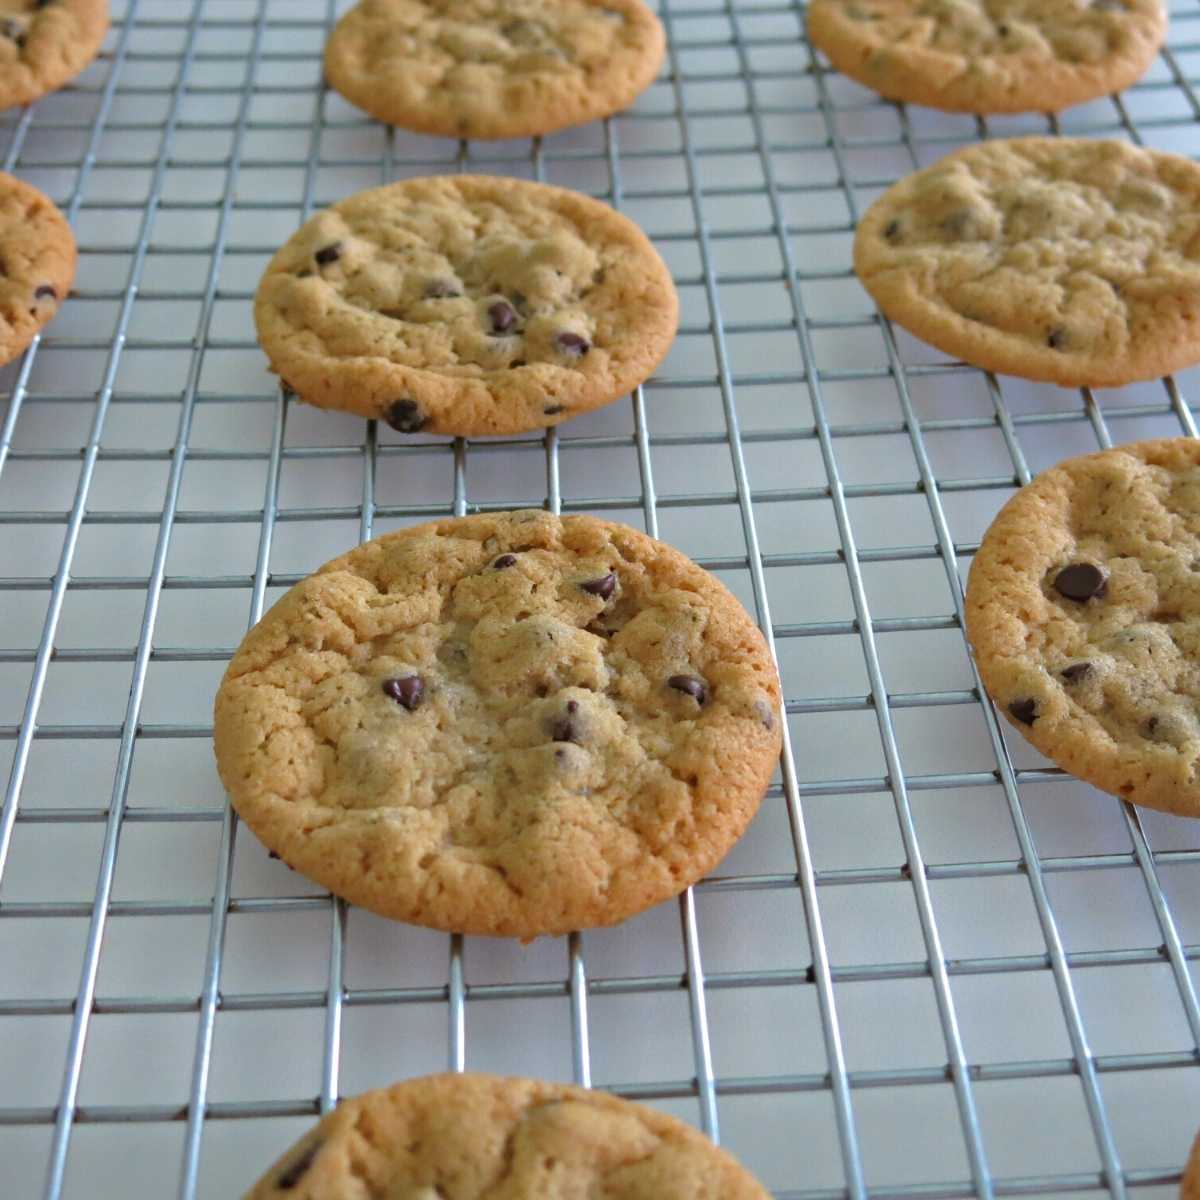 https://www.dinner-mom.com/wp-content/uploads/2021/11/Cookies-on-Cooling-Rack.jpg